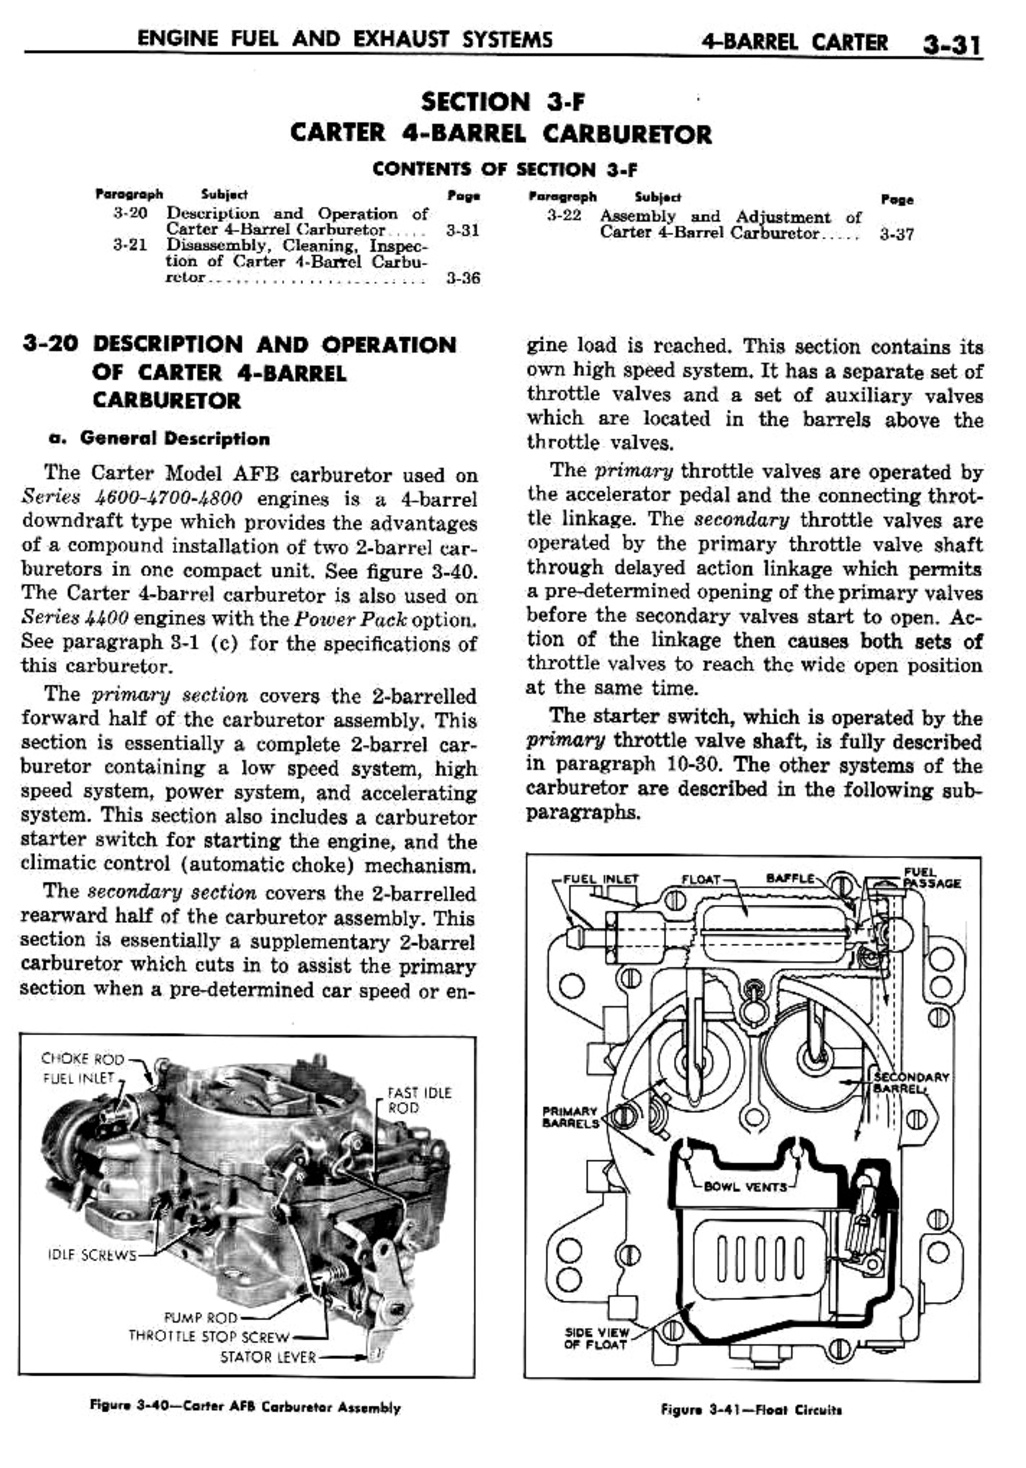 n_04 1960 Buick Shop Manual - Engine Fuel & Exhaust-031-031.jpg